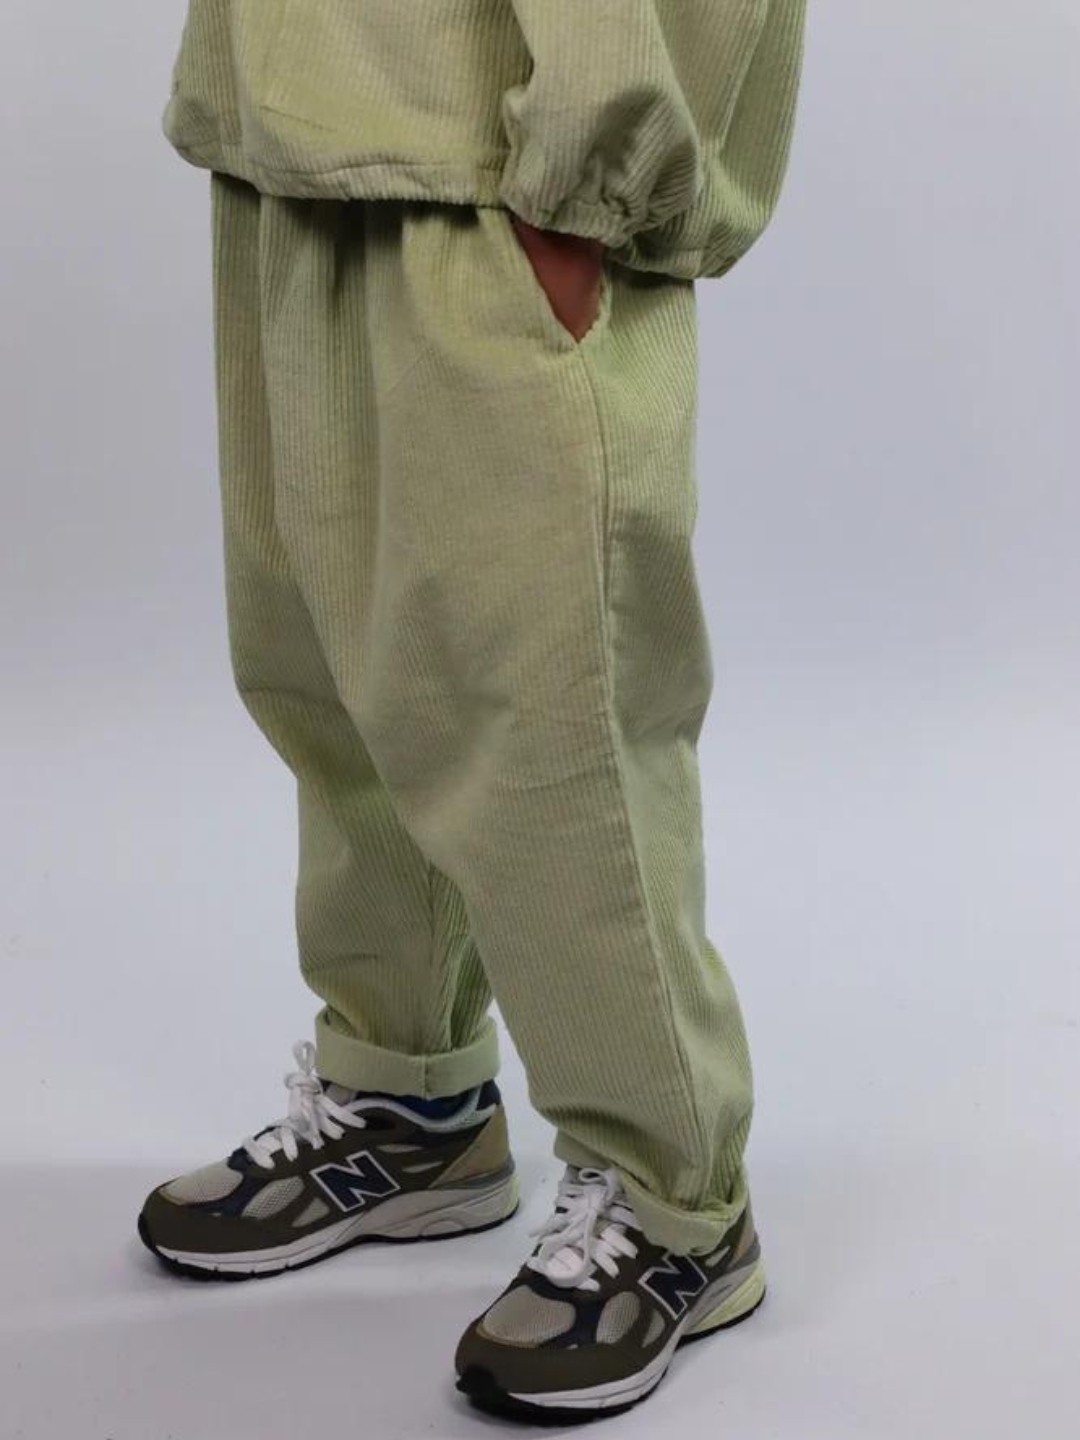 Light Pistachio | Child wearing light pistachio green kids' pants